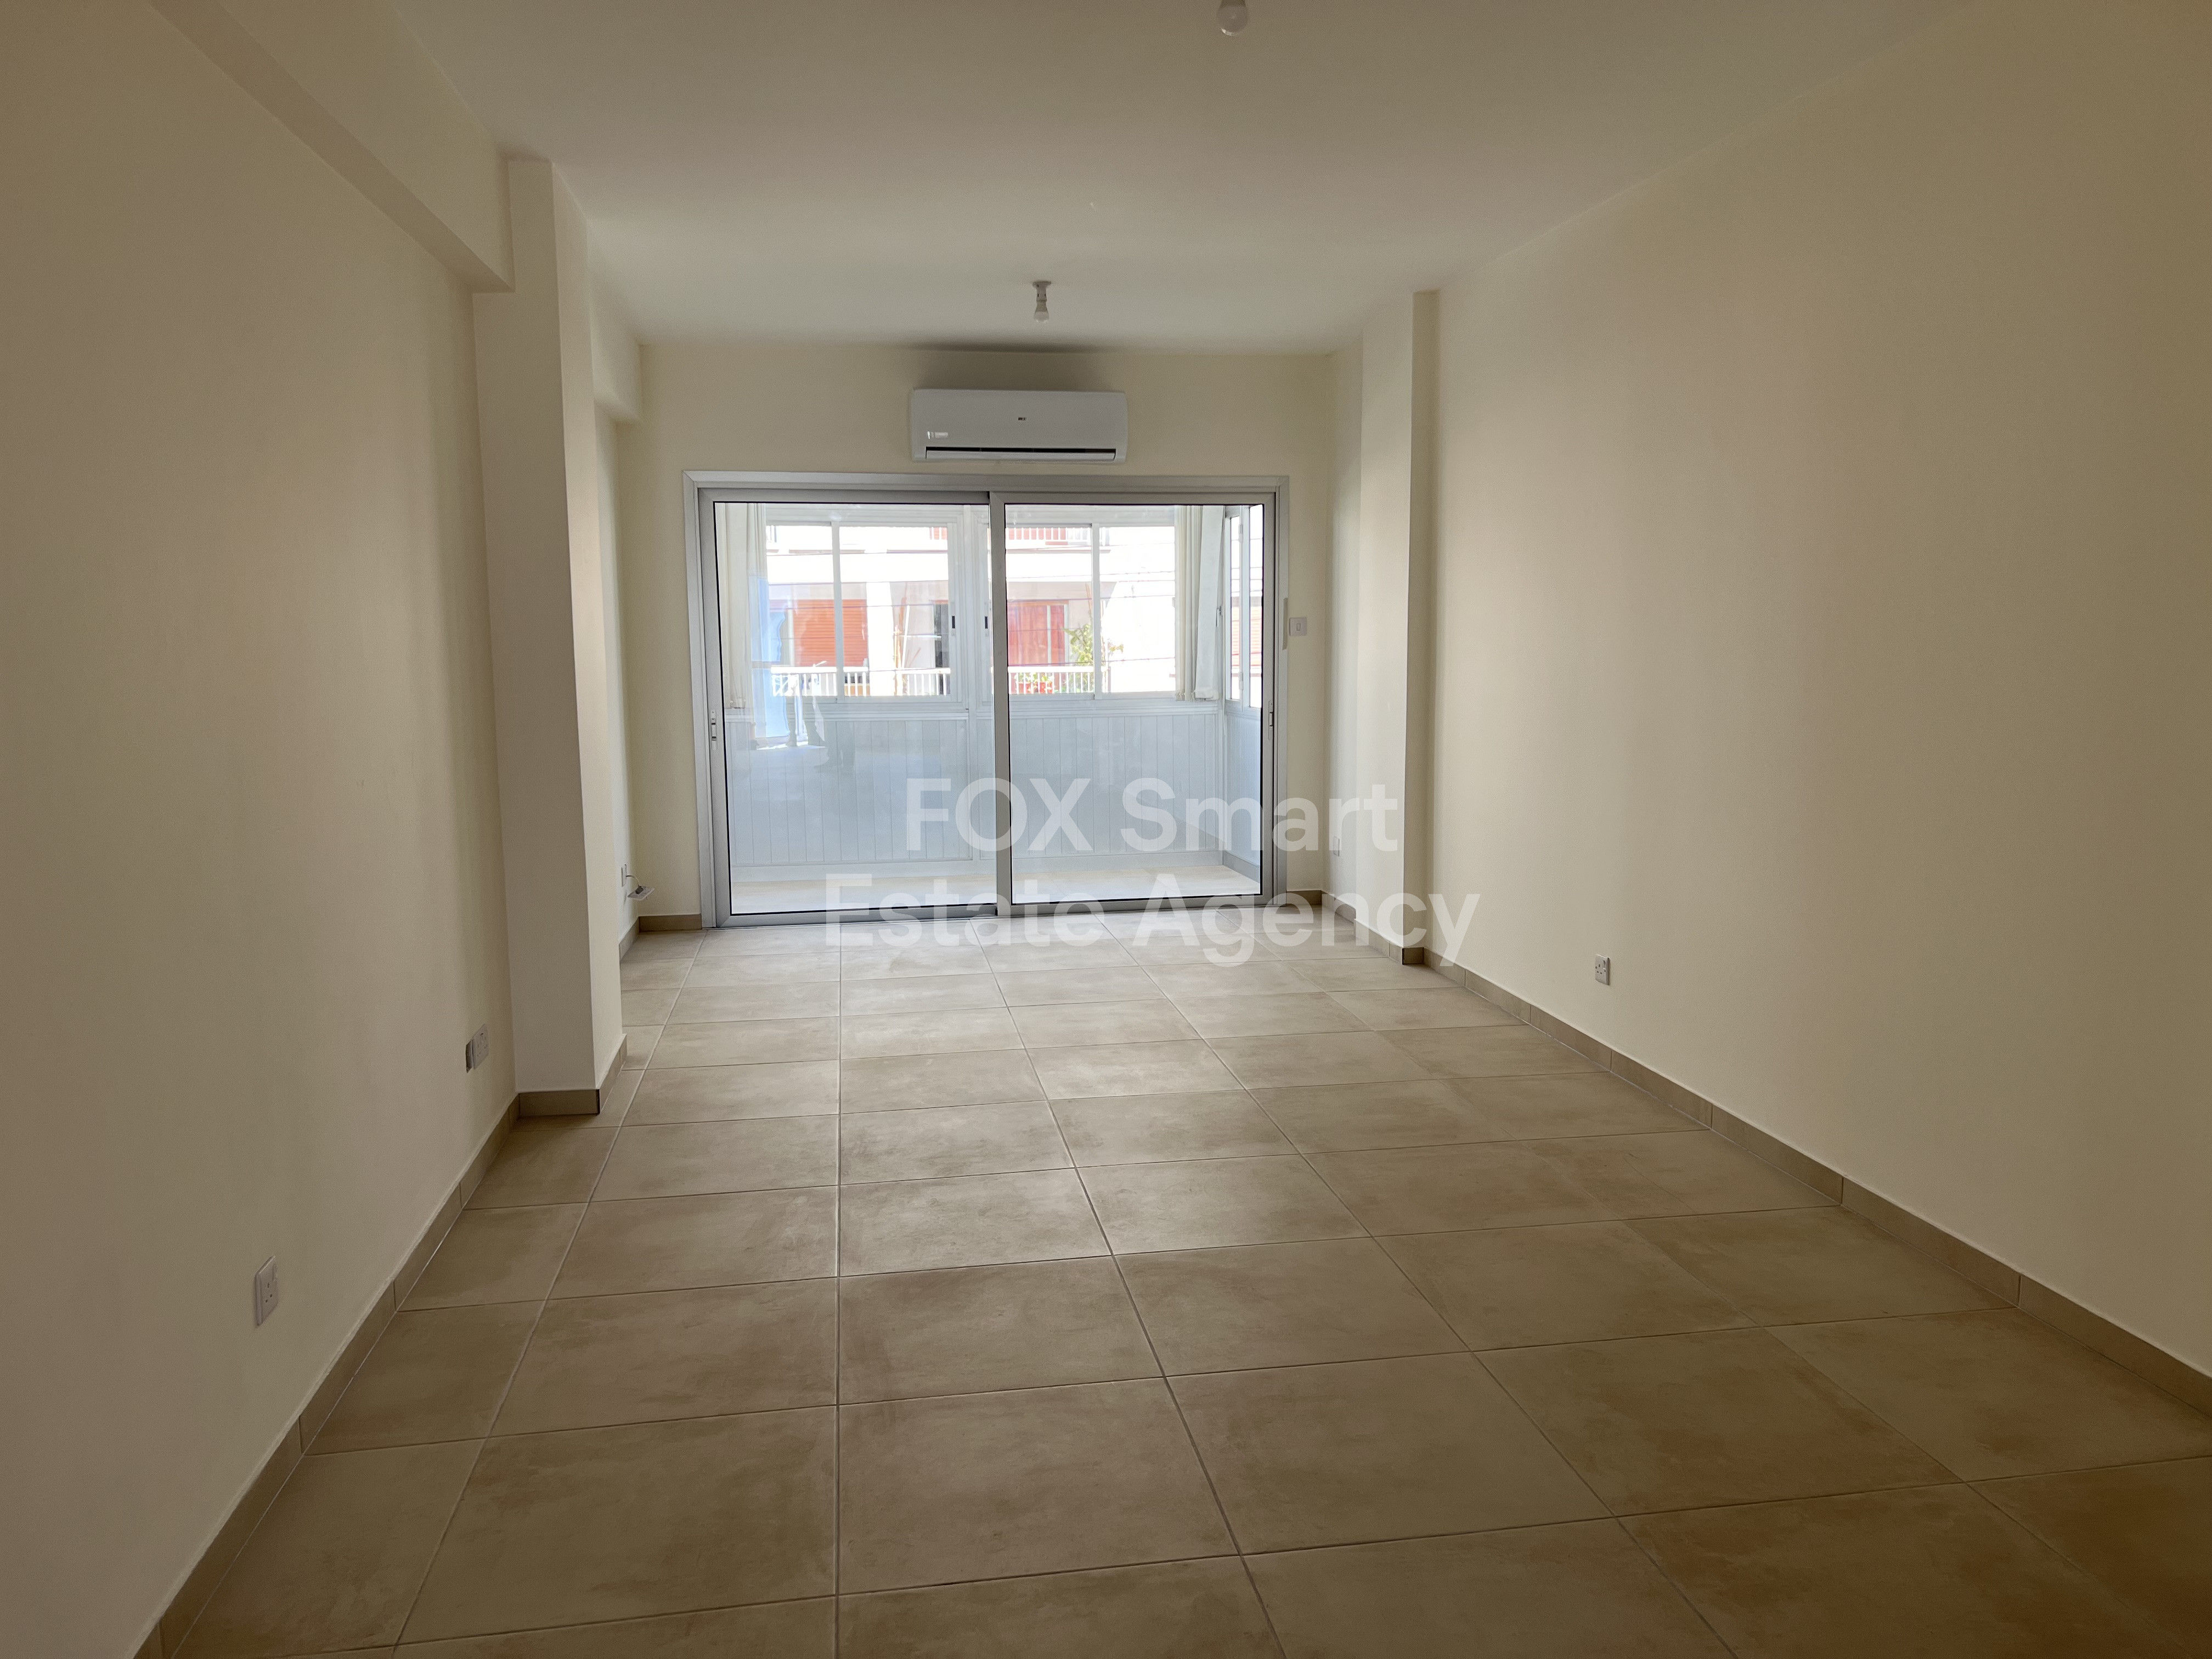 Apartment, For Sale, Nicosia, Strovolos  3 Bedrooms 1 Bathro.....